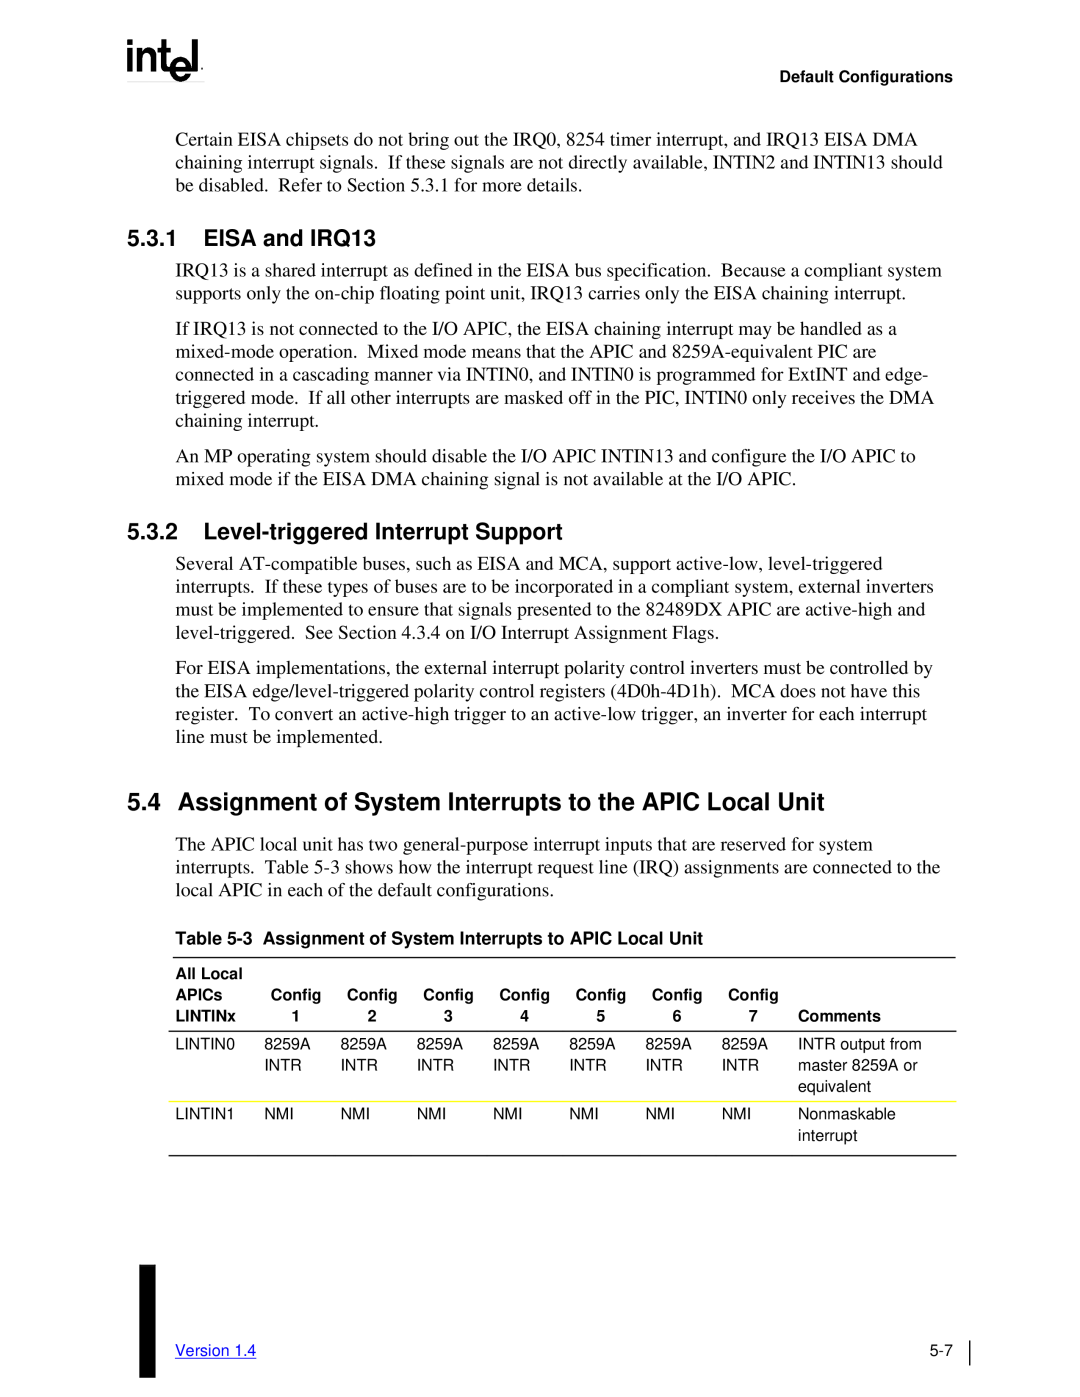 Intel MultiProcessor manual 5.3.1EISA and IRQ13, 5.3.2Level-triggeredInterrupt Support 